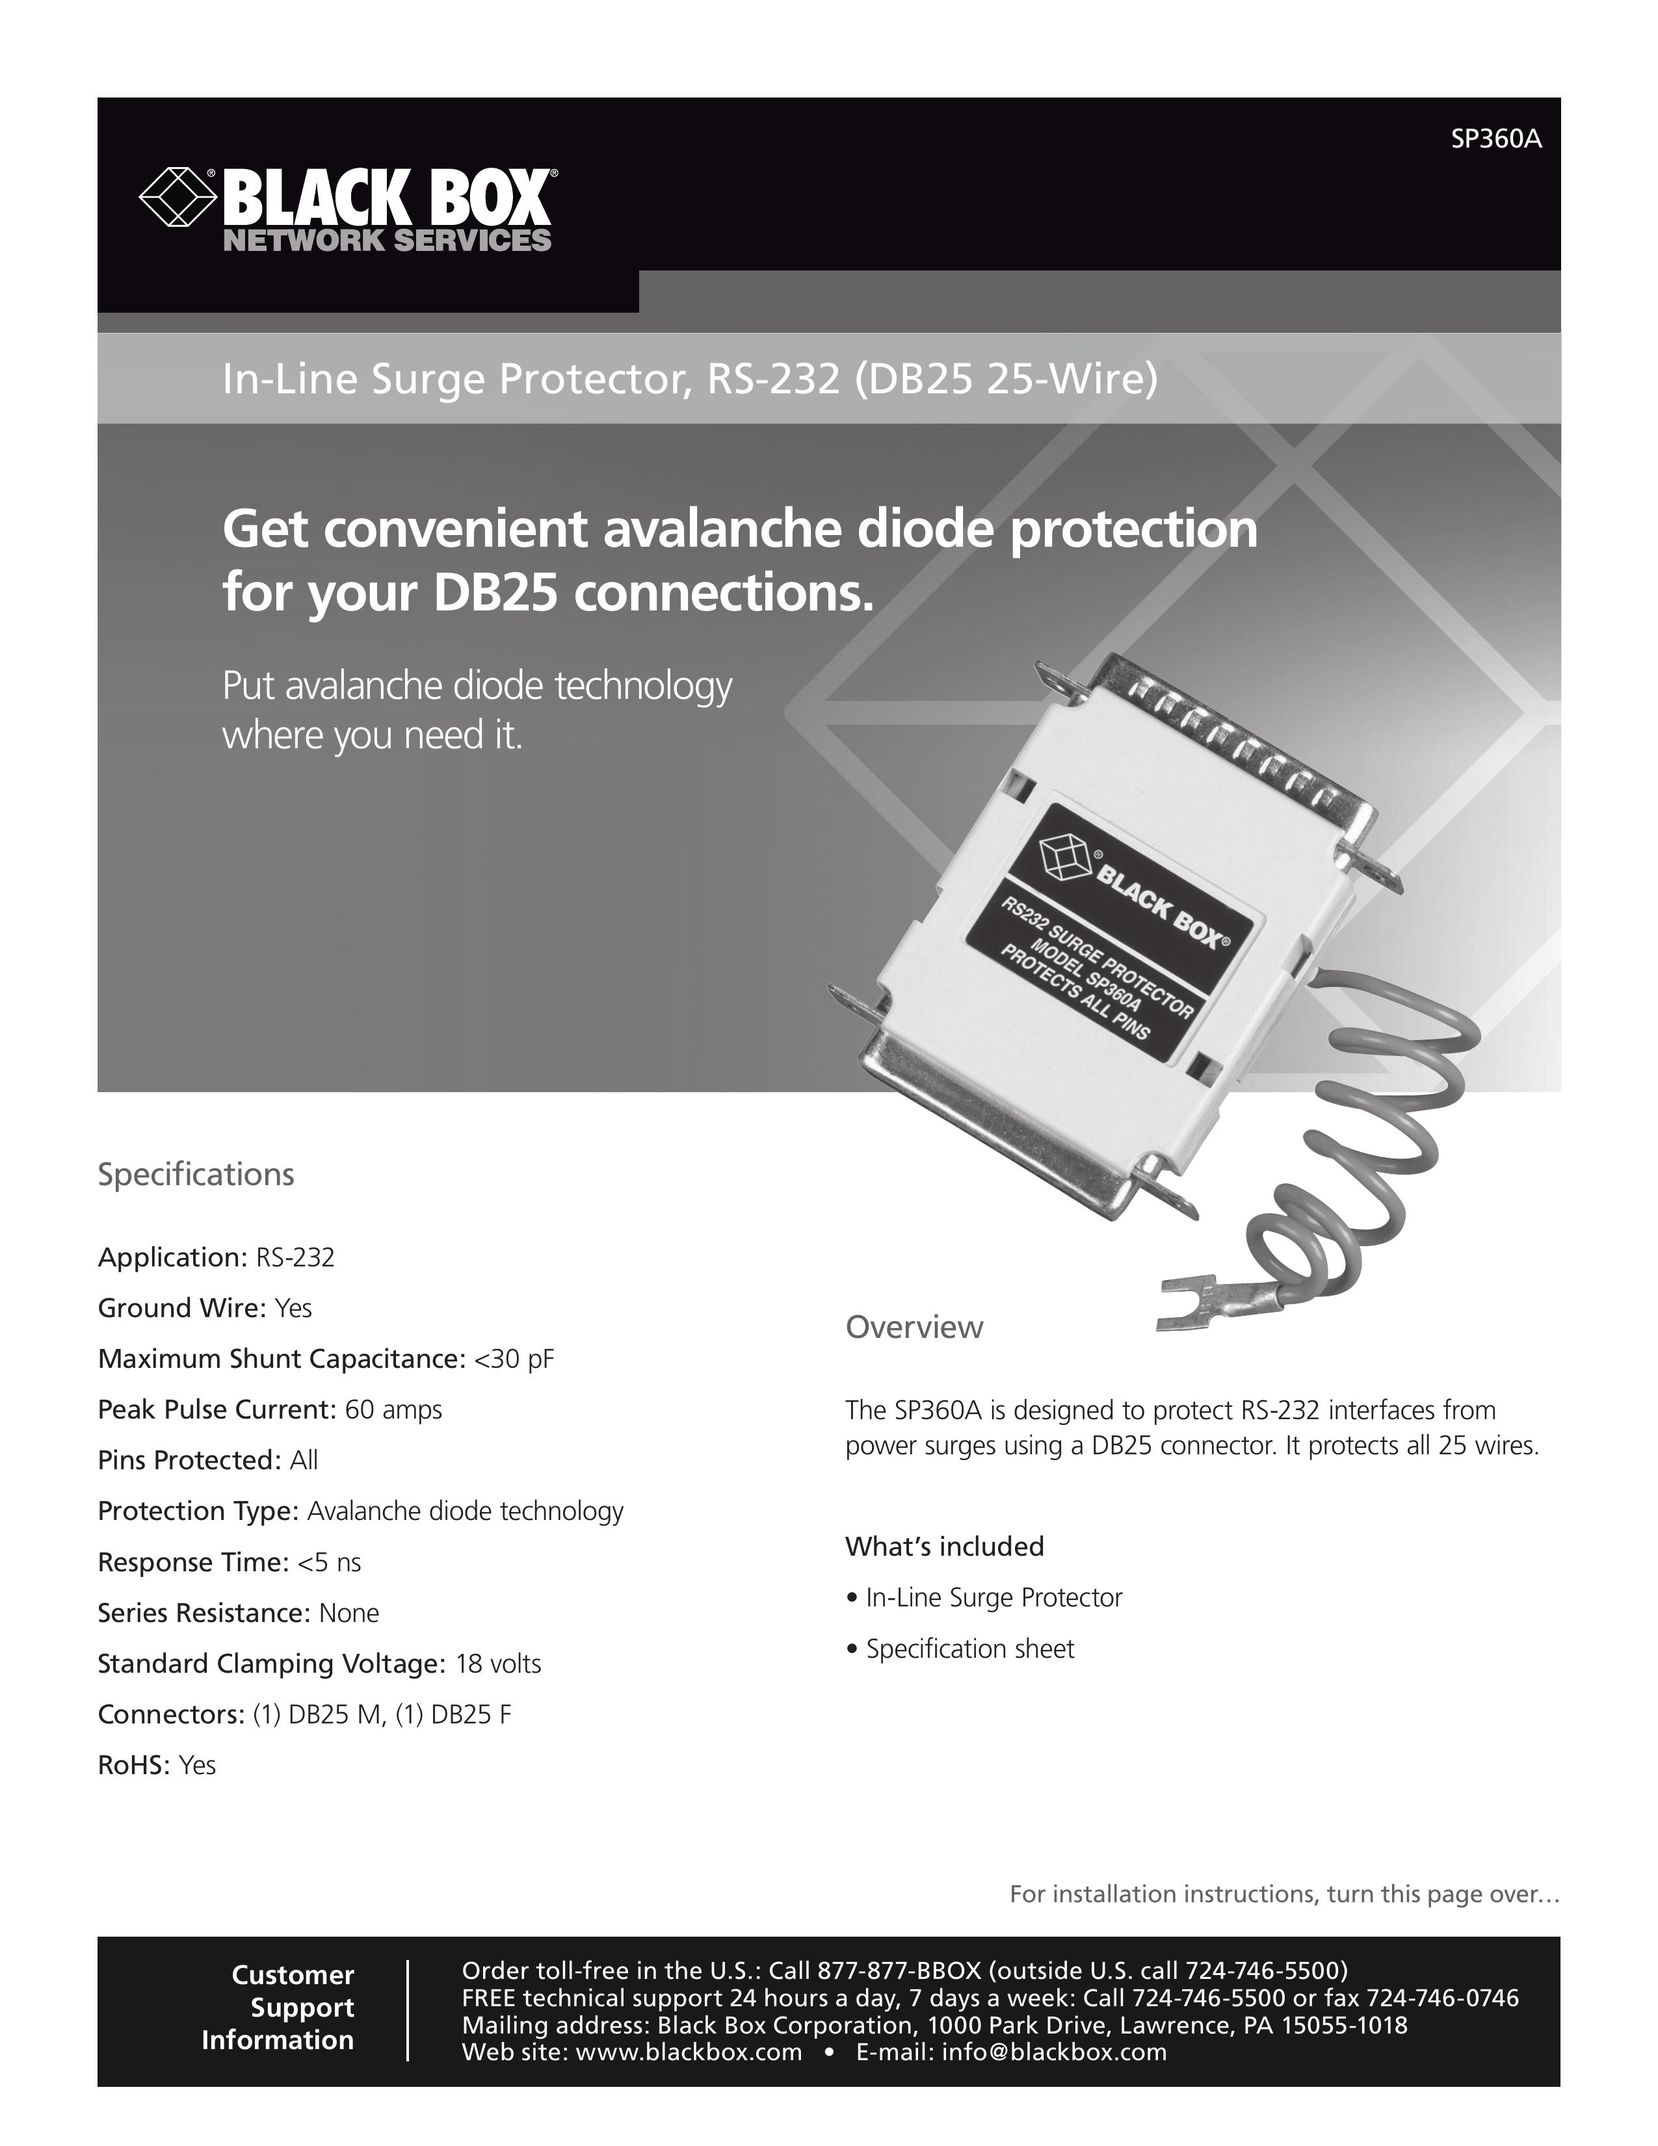 Black Box RS-232 Surge Protector User Manual